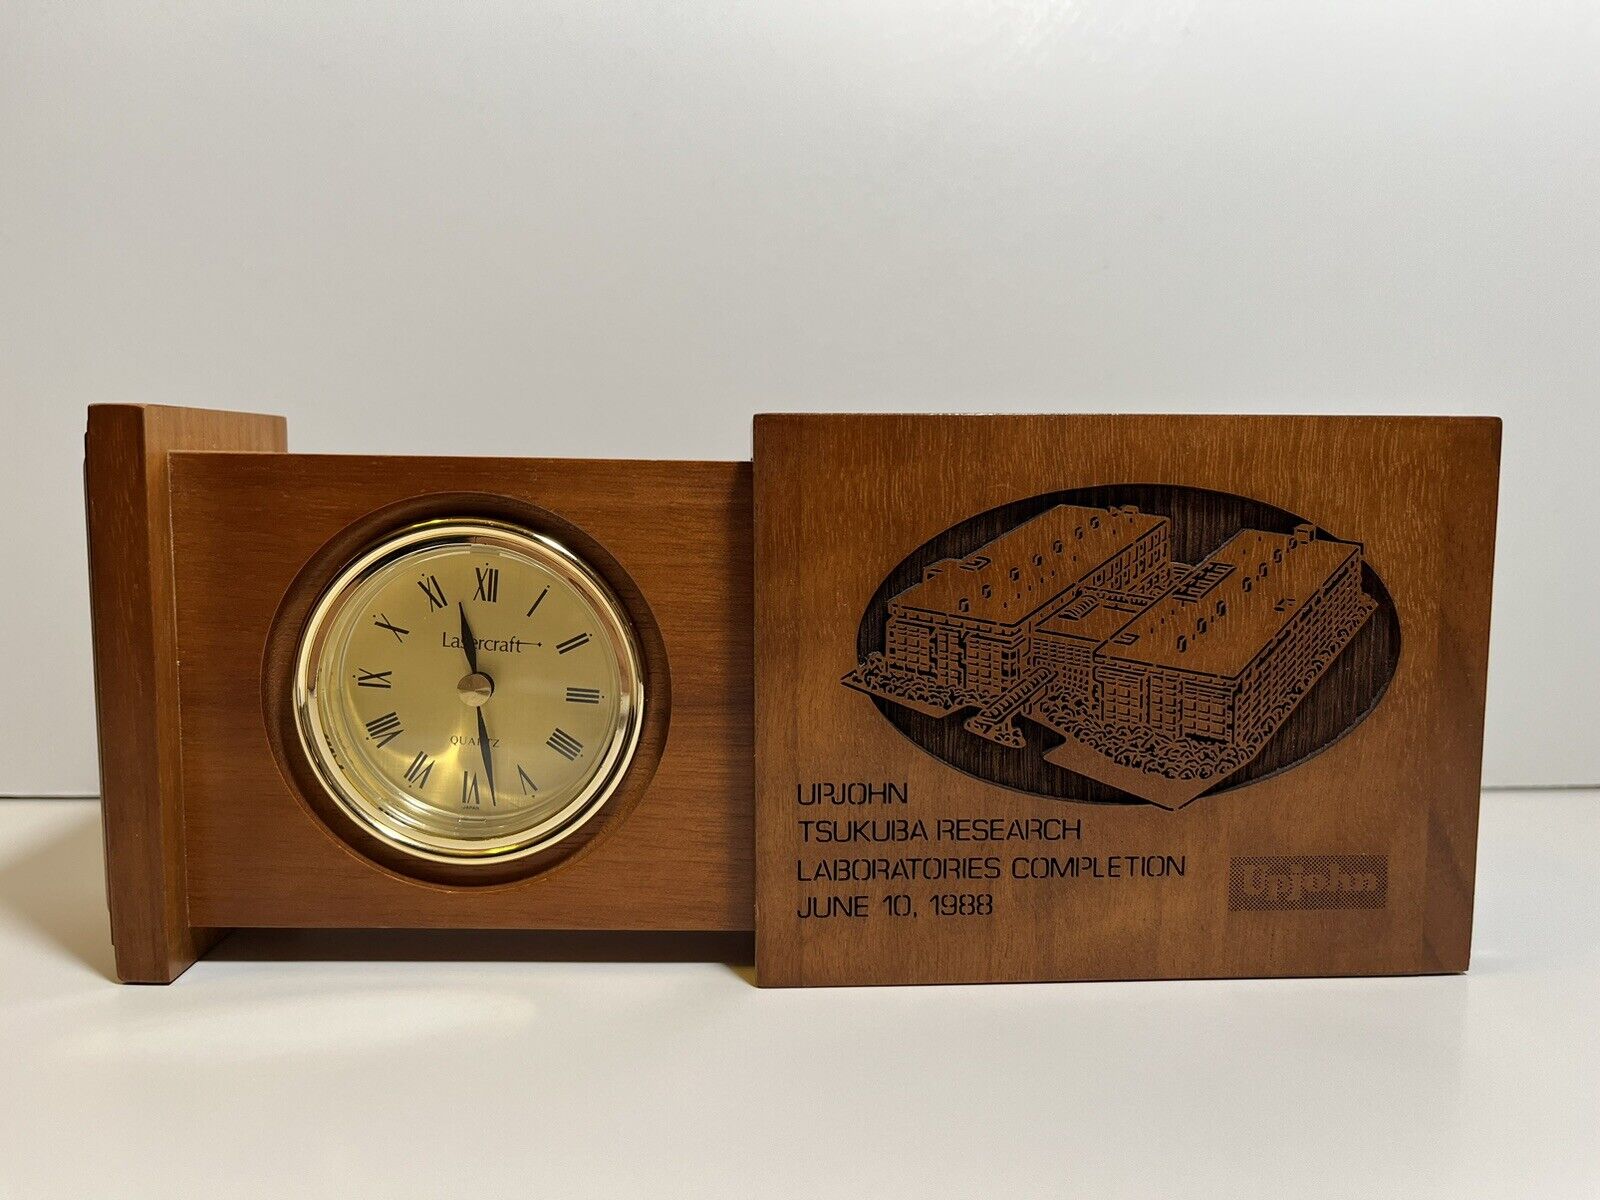 Upjohn Co. Pharmaceuticals Commemorative Clock - 1988 TSUKUBA RESEARCH LAB OPEN